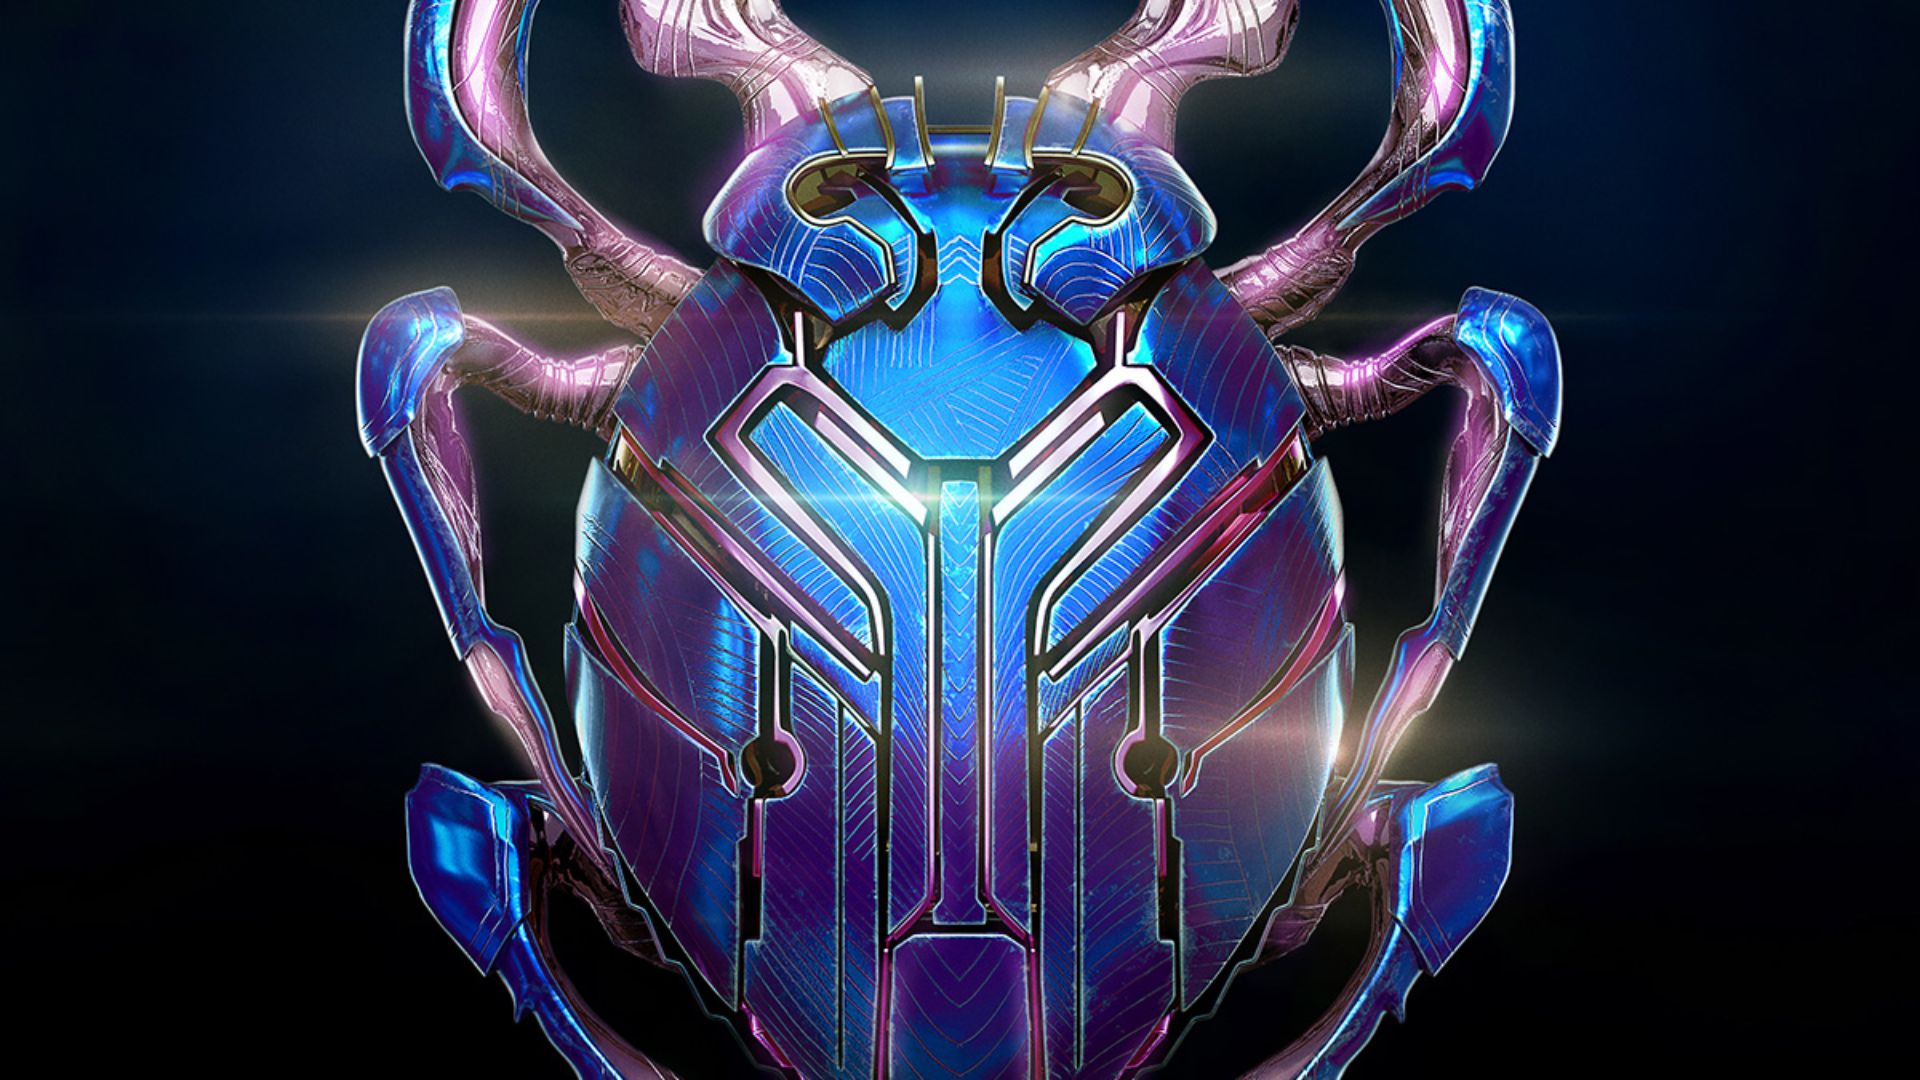 imagen promocional del logotipo de la pelicula blue Beetle